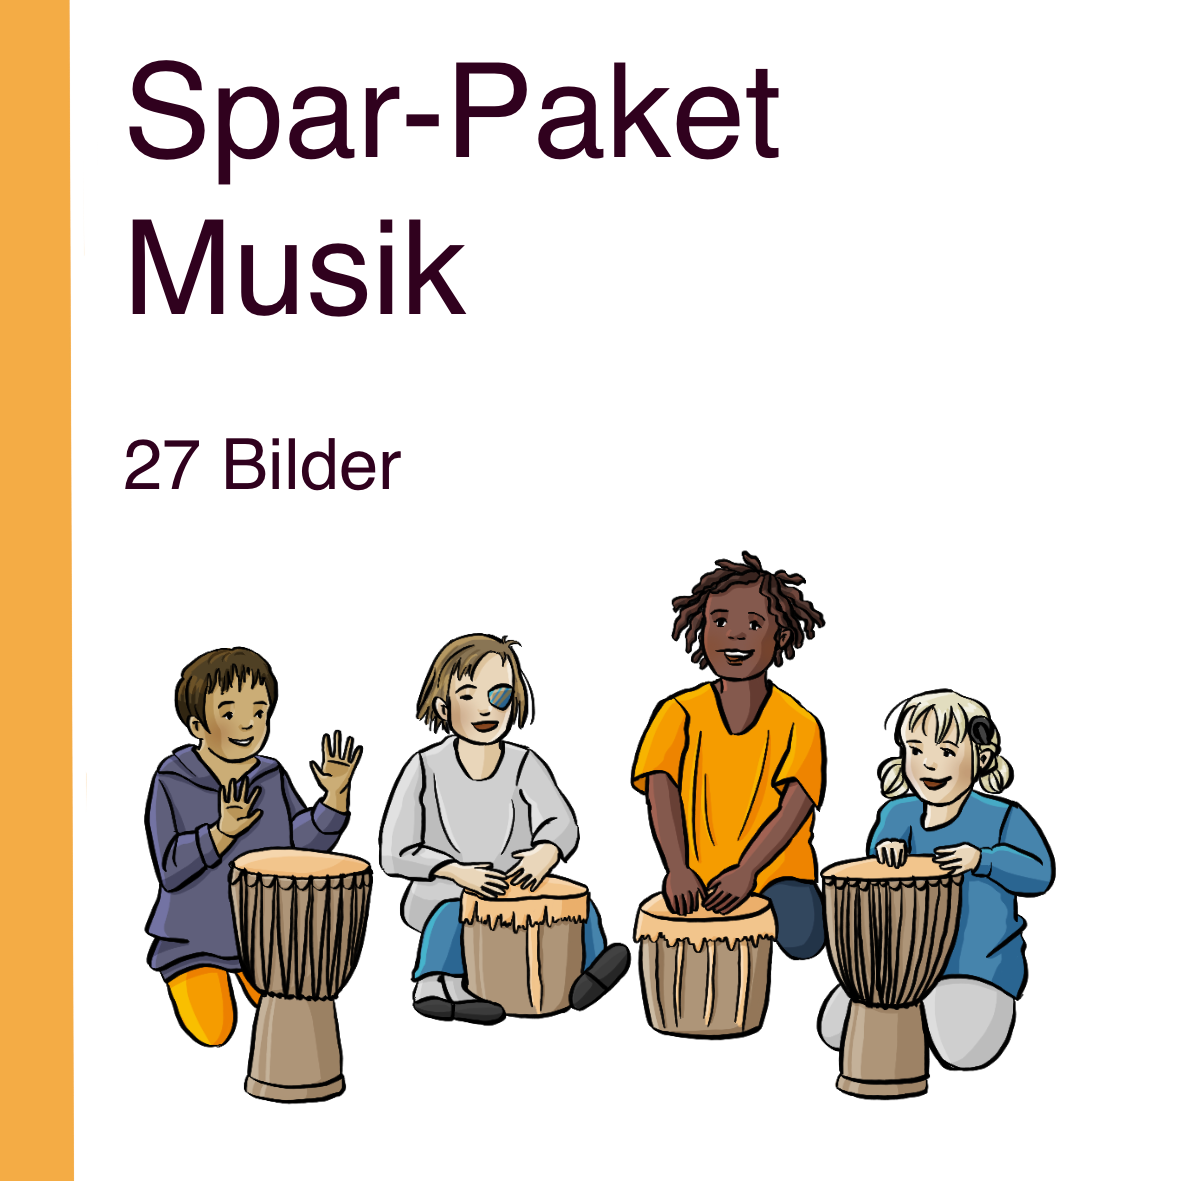 Spar-Paket Musik